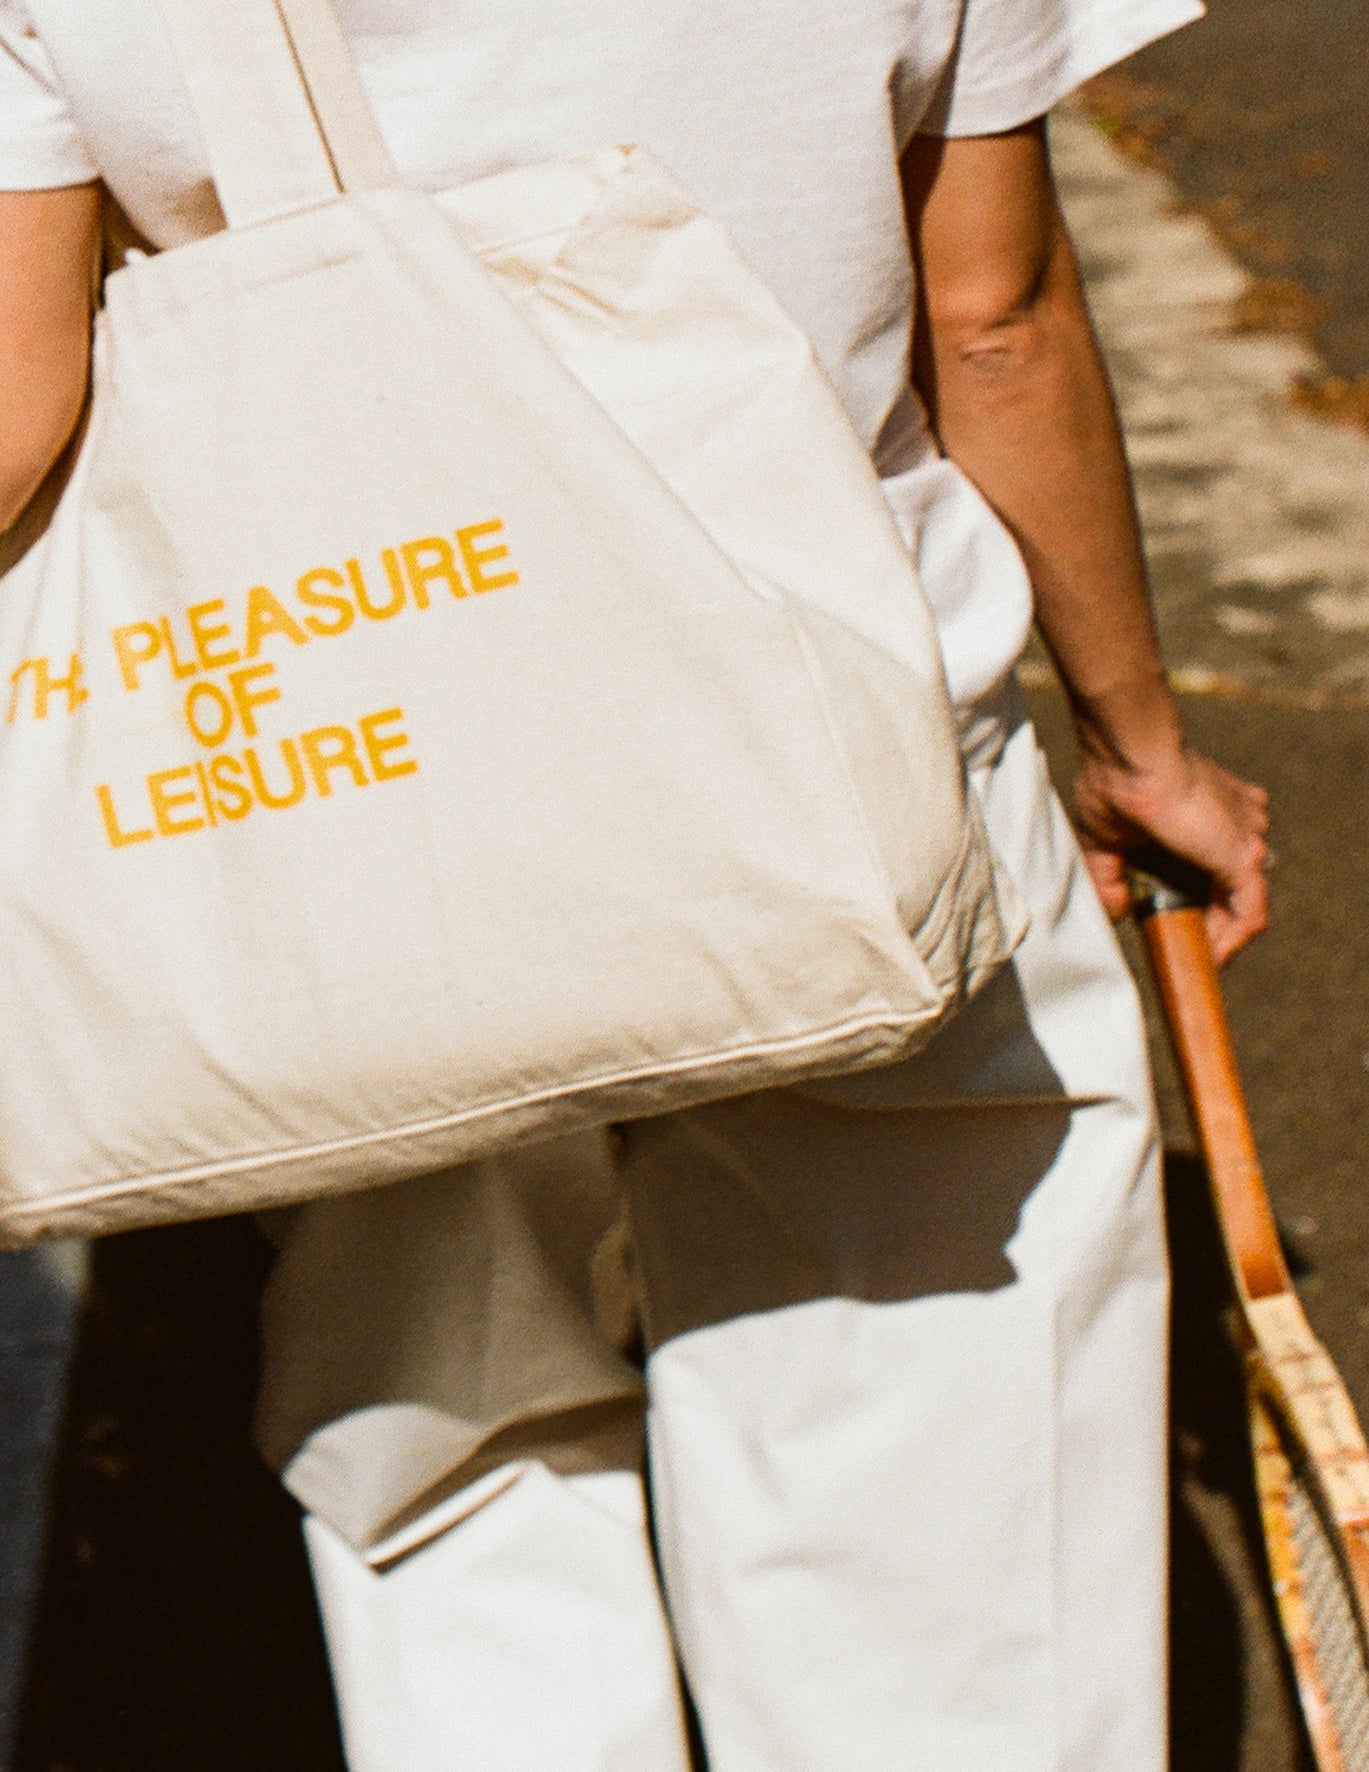 The Pleasure of Leisure tote bag